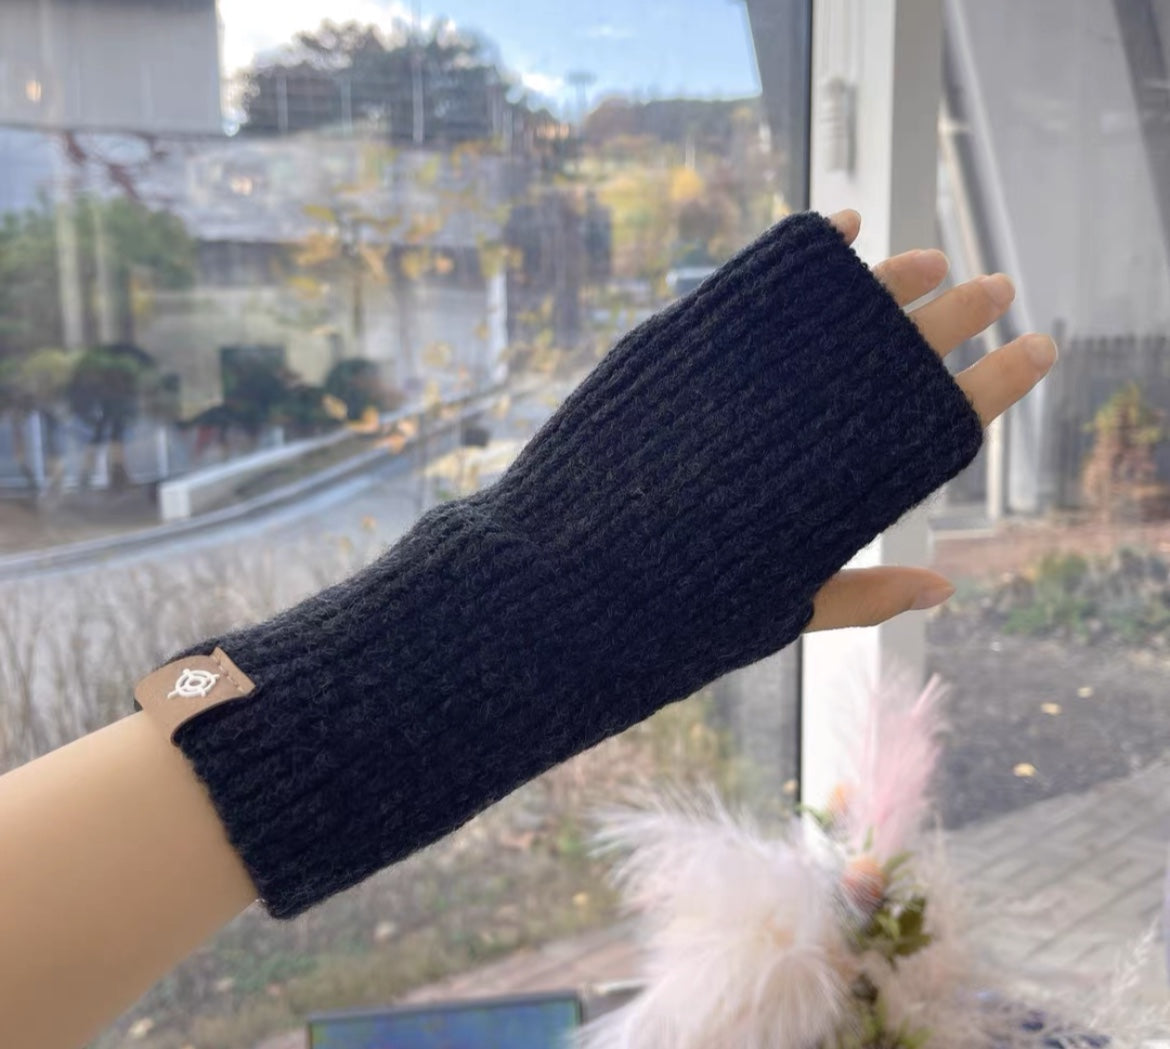 Polly Fingerless Gloves / Hand Warmers